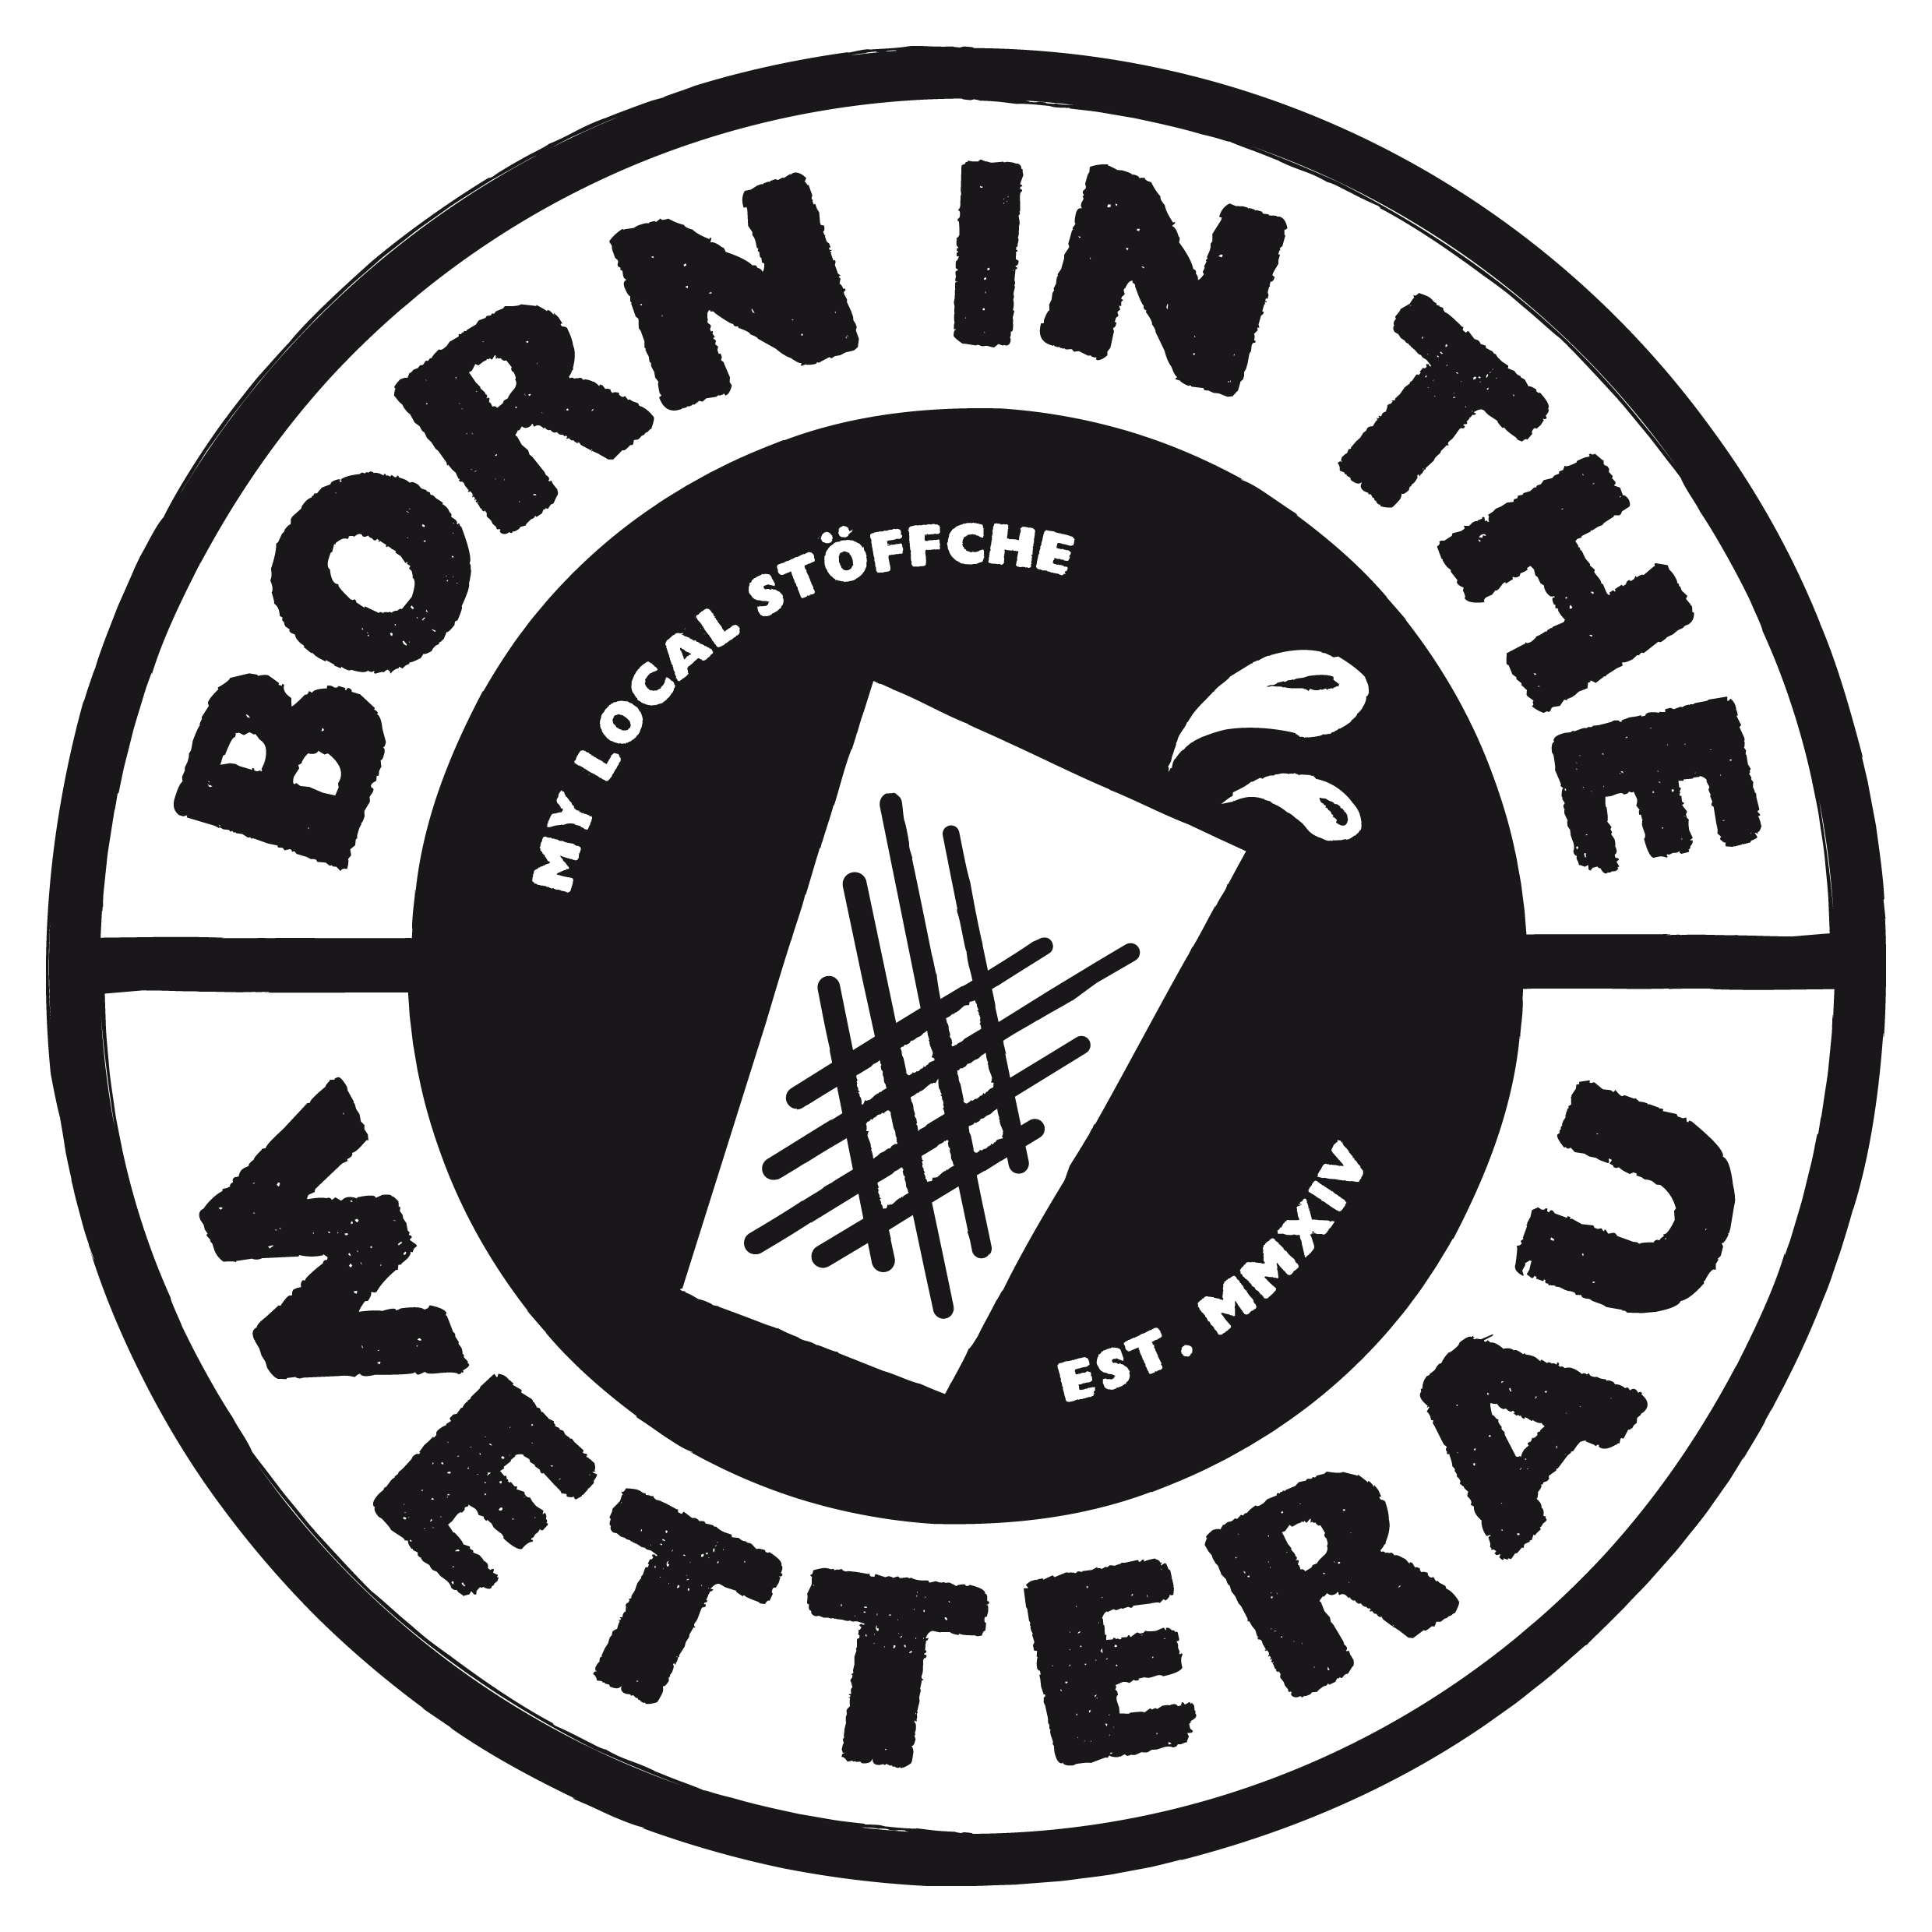 Born in the Wetterau